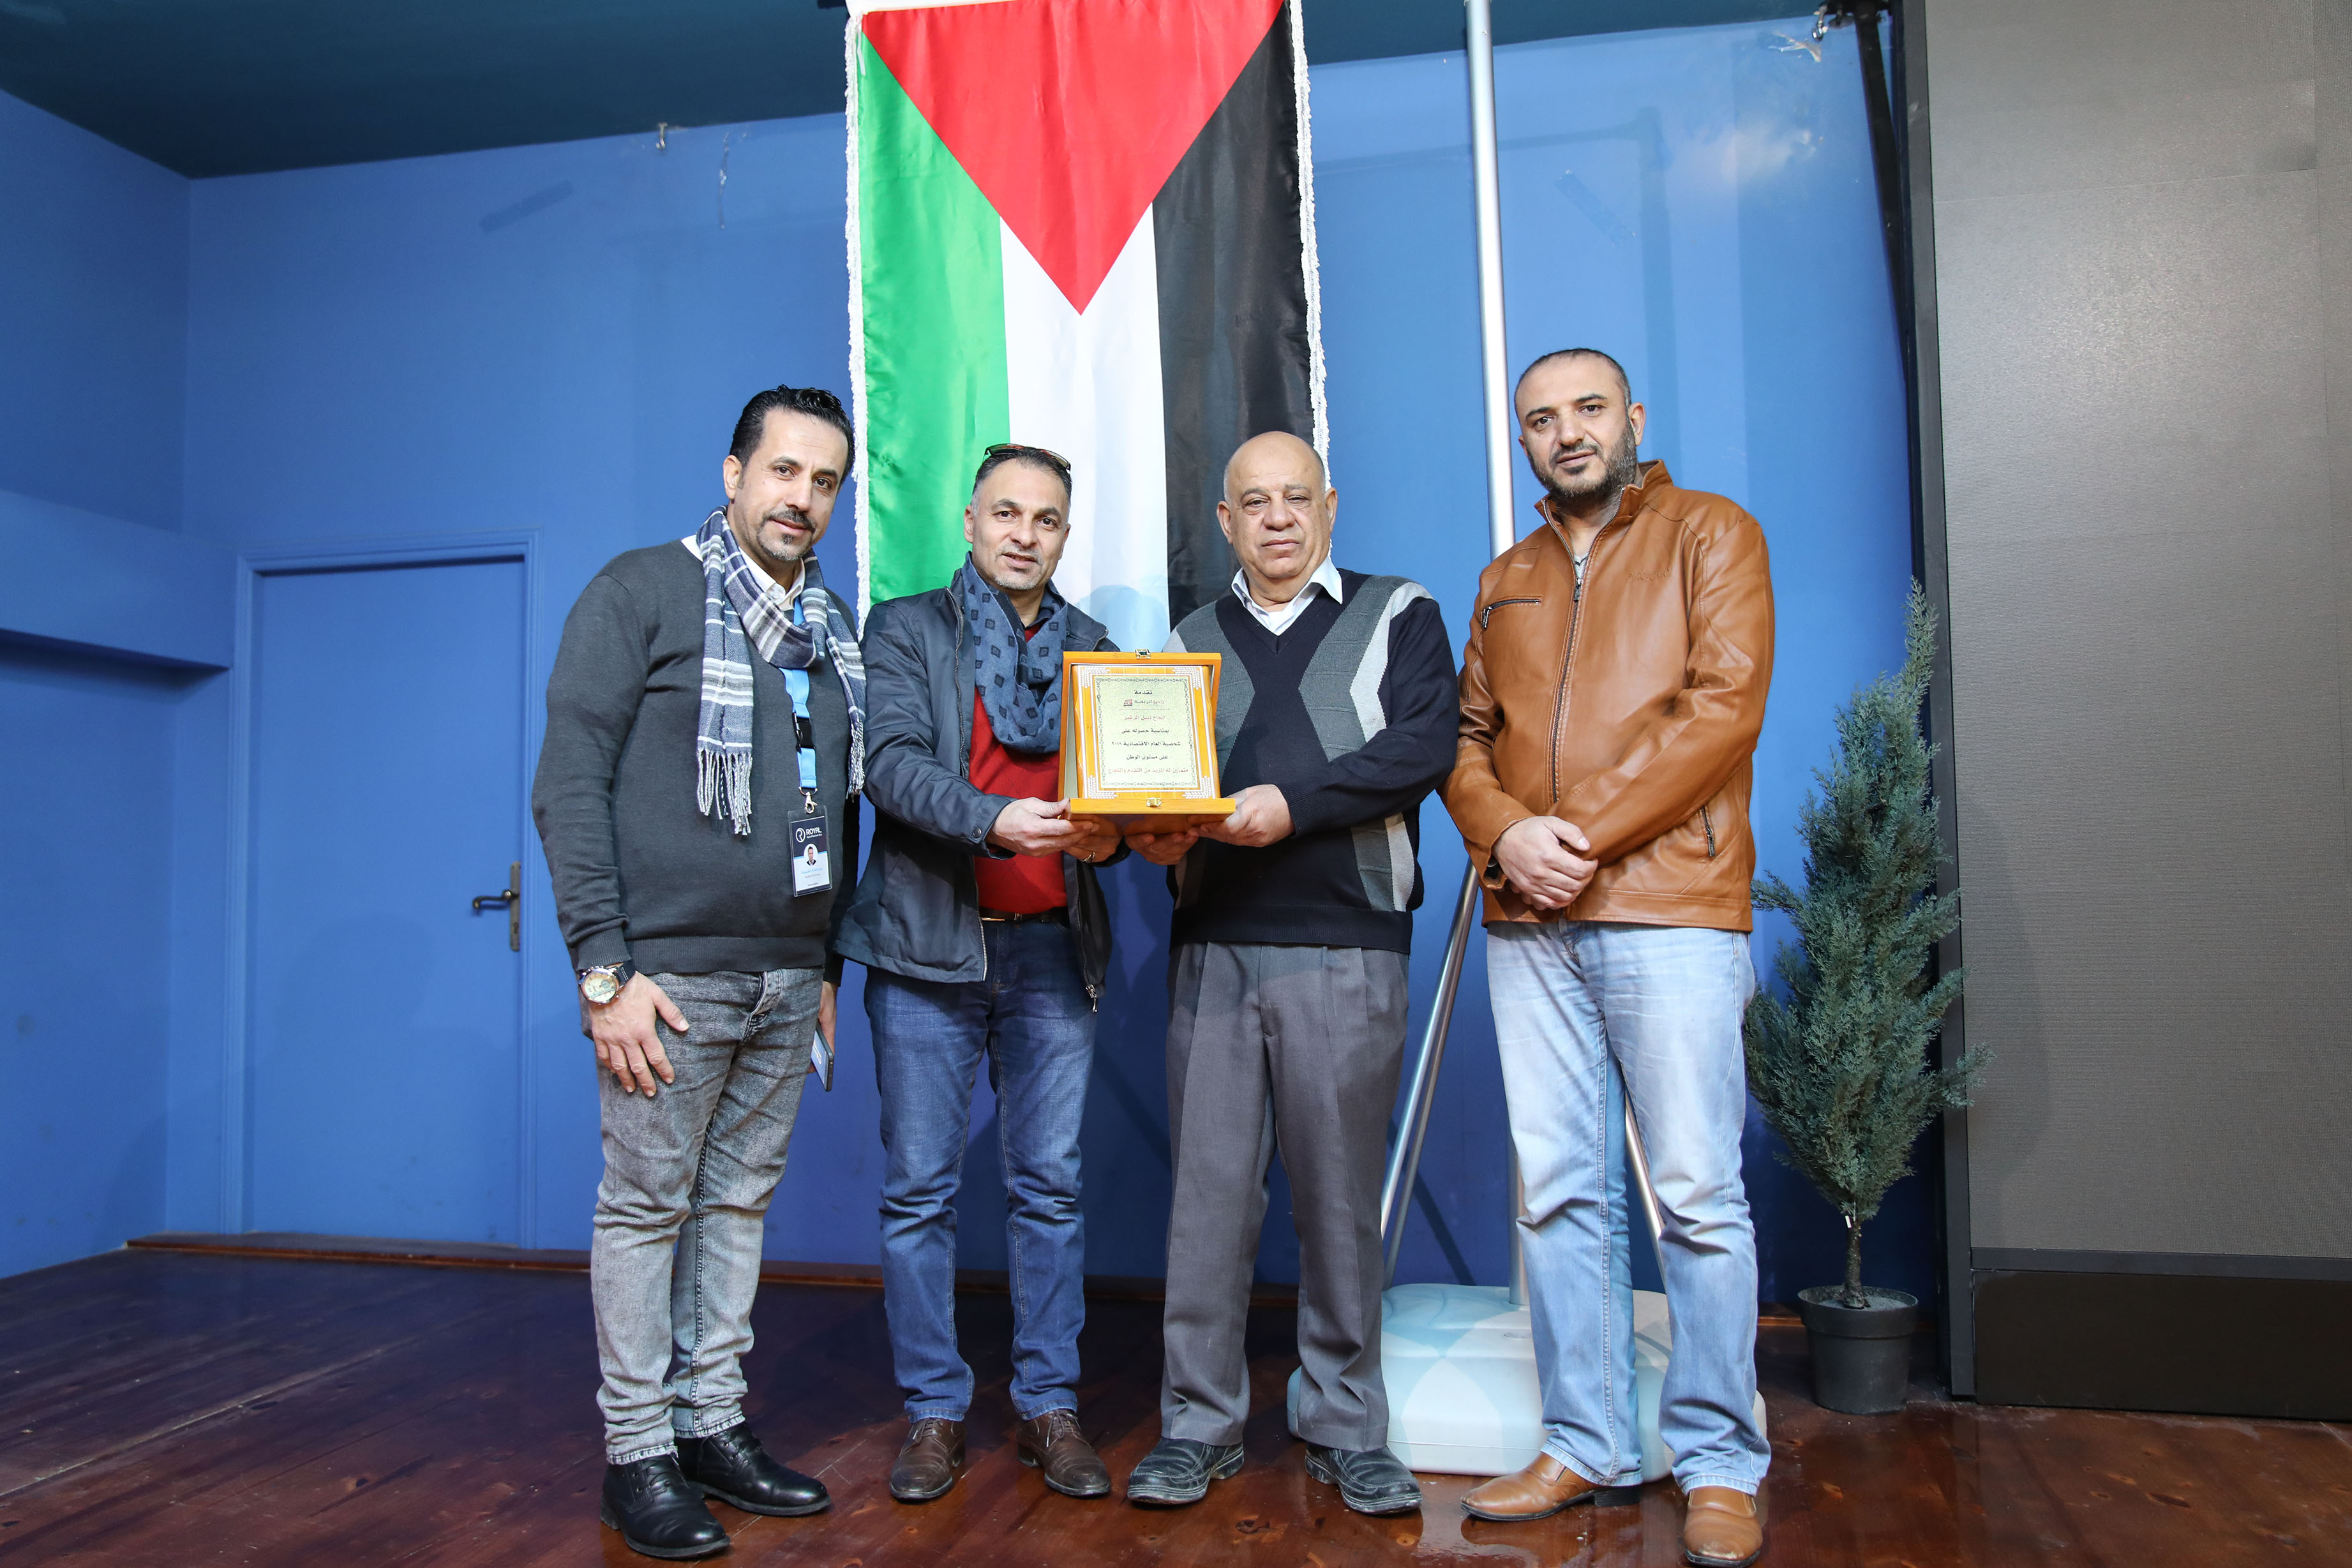 Radio alrrabiea blesses Mr.nabil al zoghair, the Man of Palestine Award